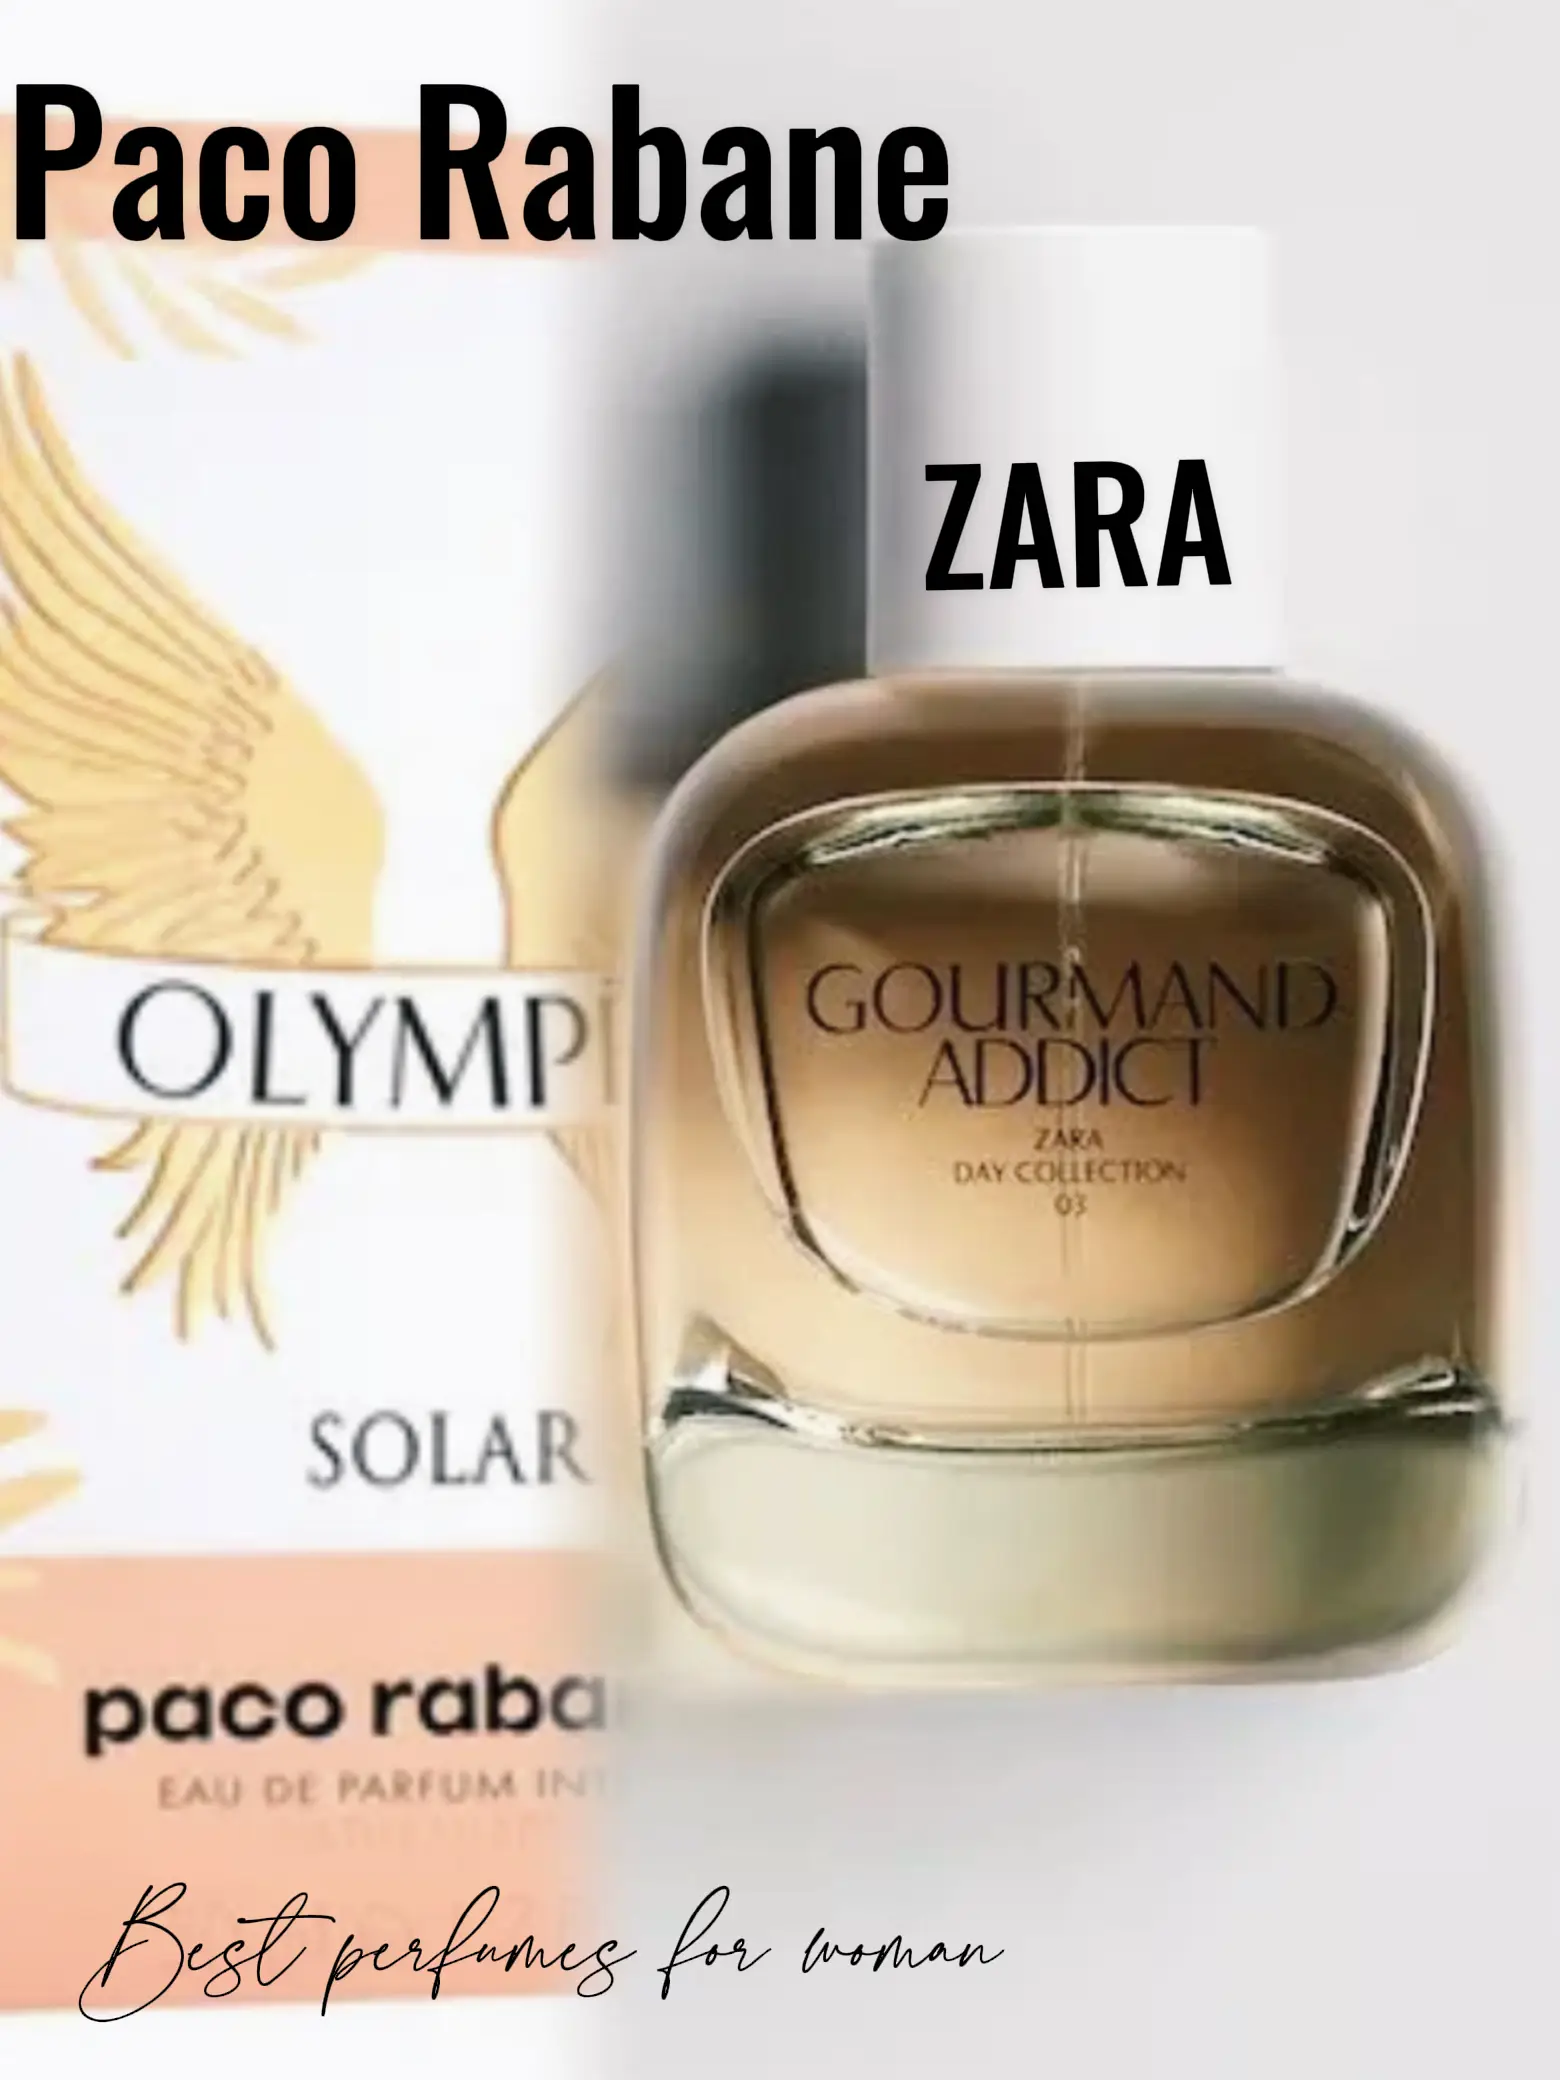 Paco Rabane Paris Olympea VS Zara Gourmand Addict, Gallery posted by  Ladysharks